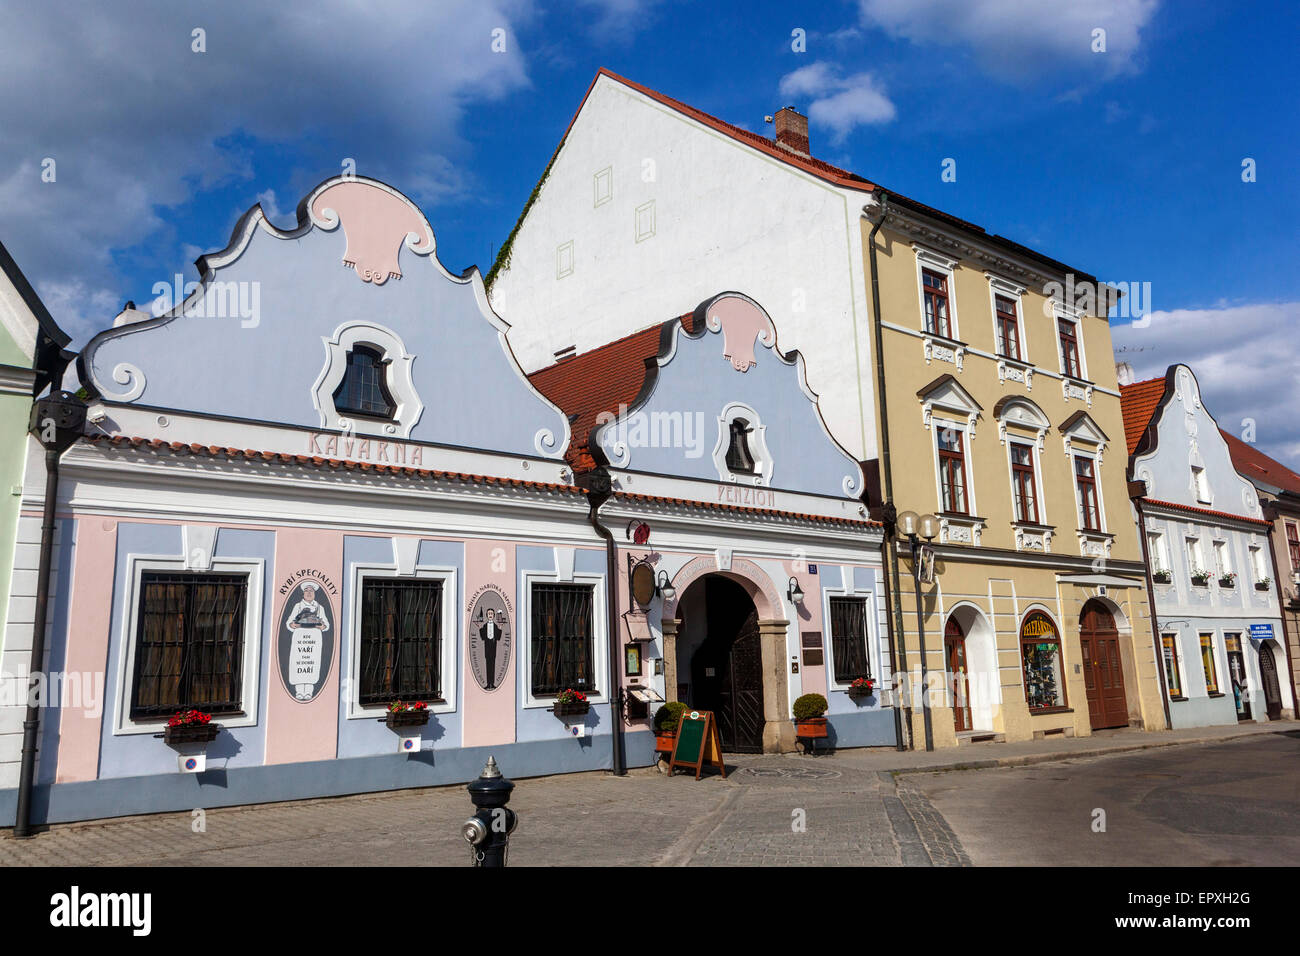 Historische Altstadt, Trebon, Tschechisch, Stockfoto